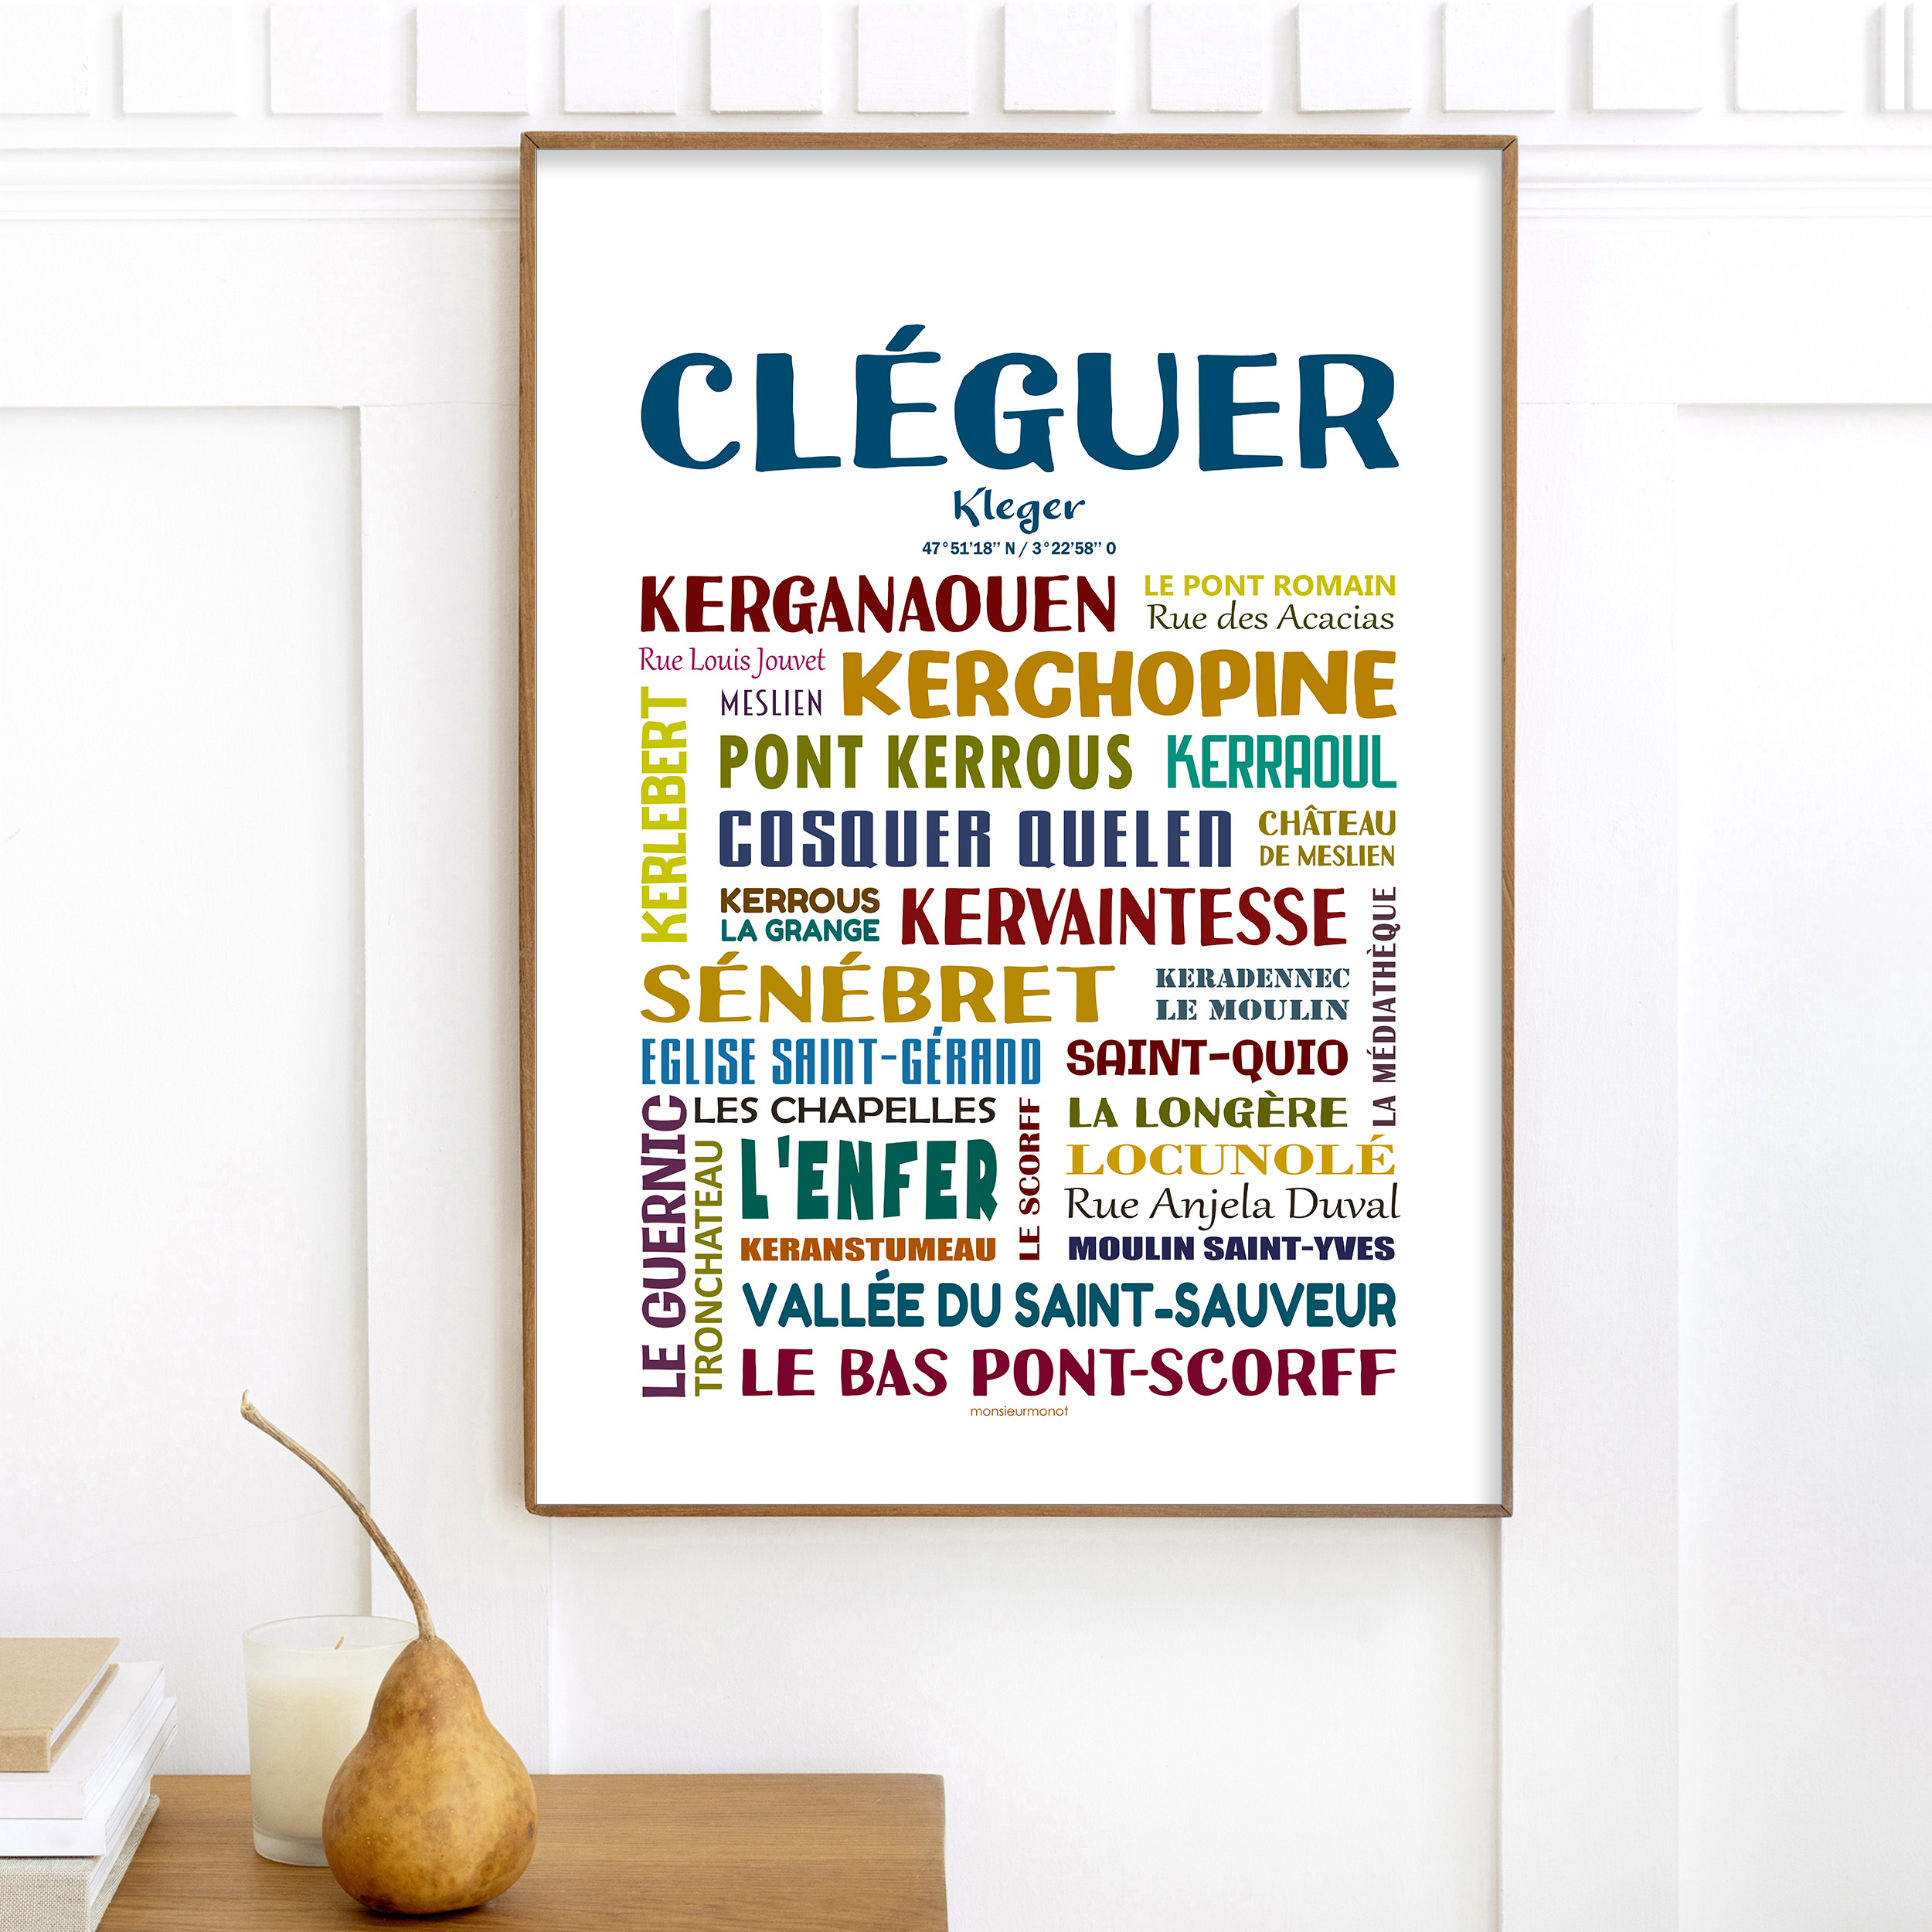 Cléguer